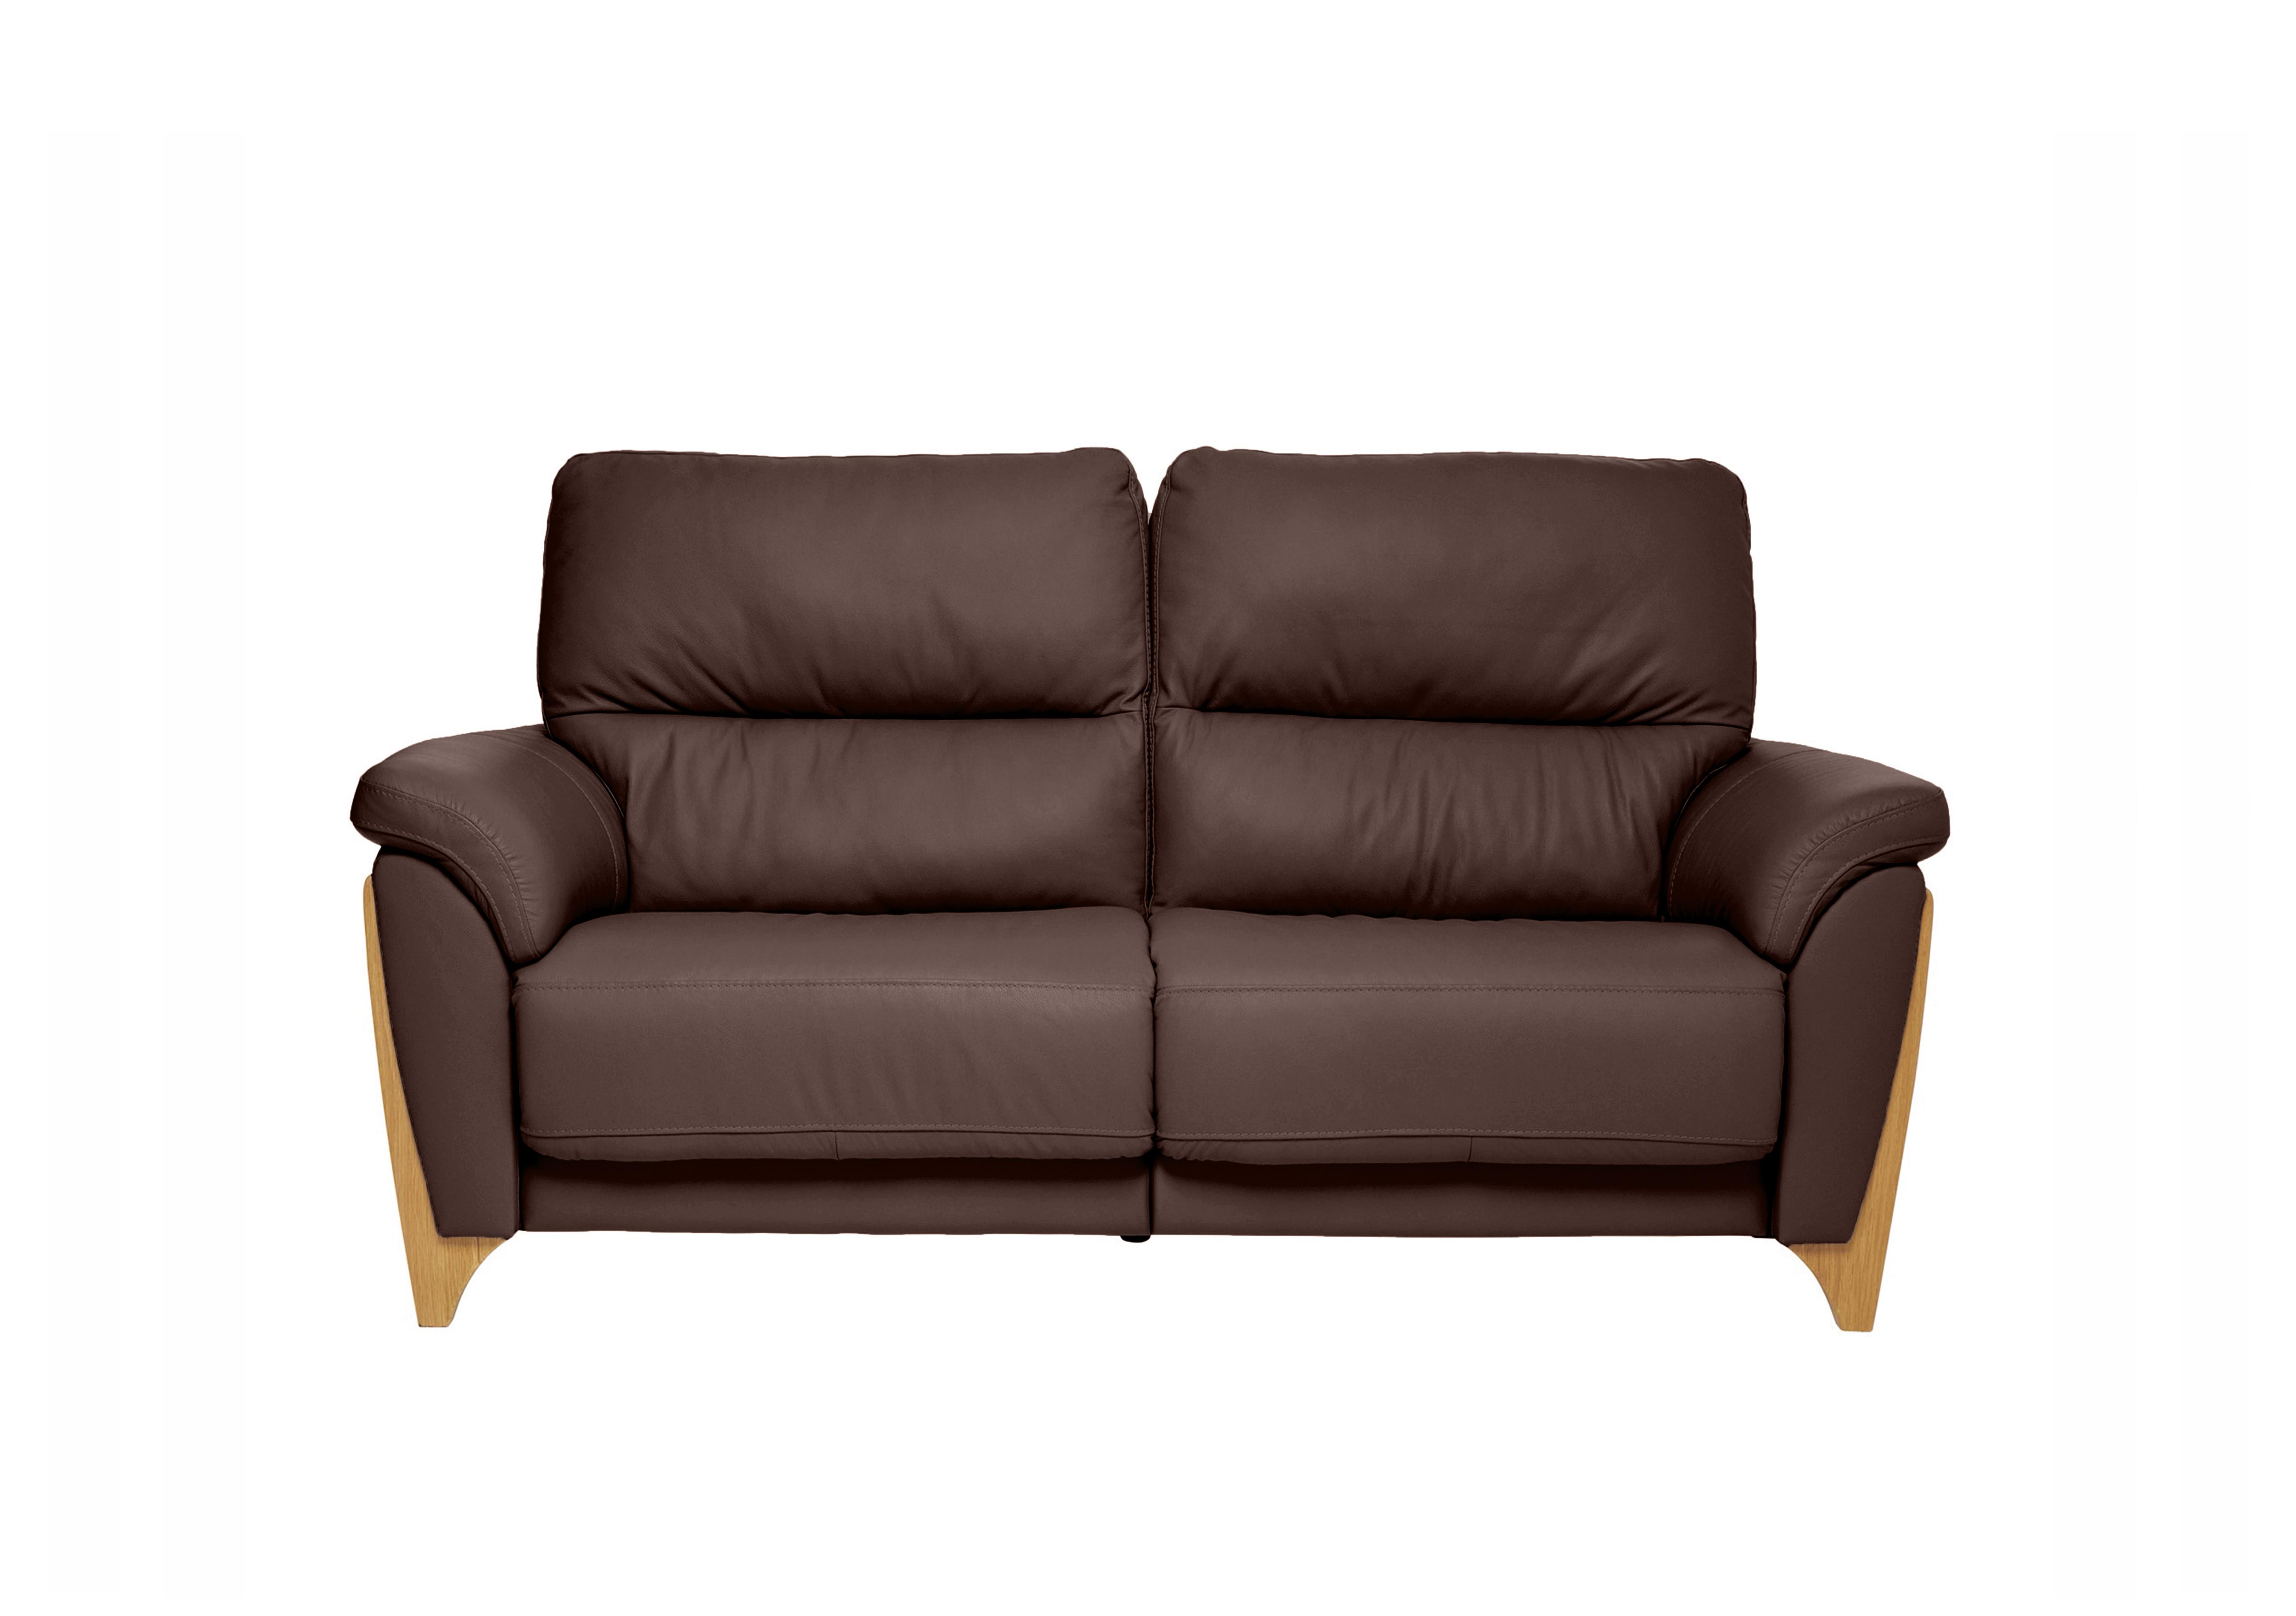 Enna Medium Leather Power Recliner Sofa in L901 on Furniture Village